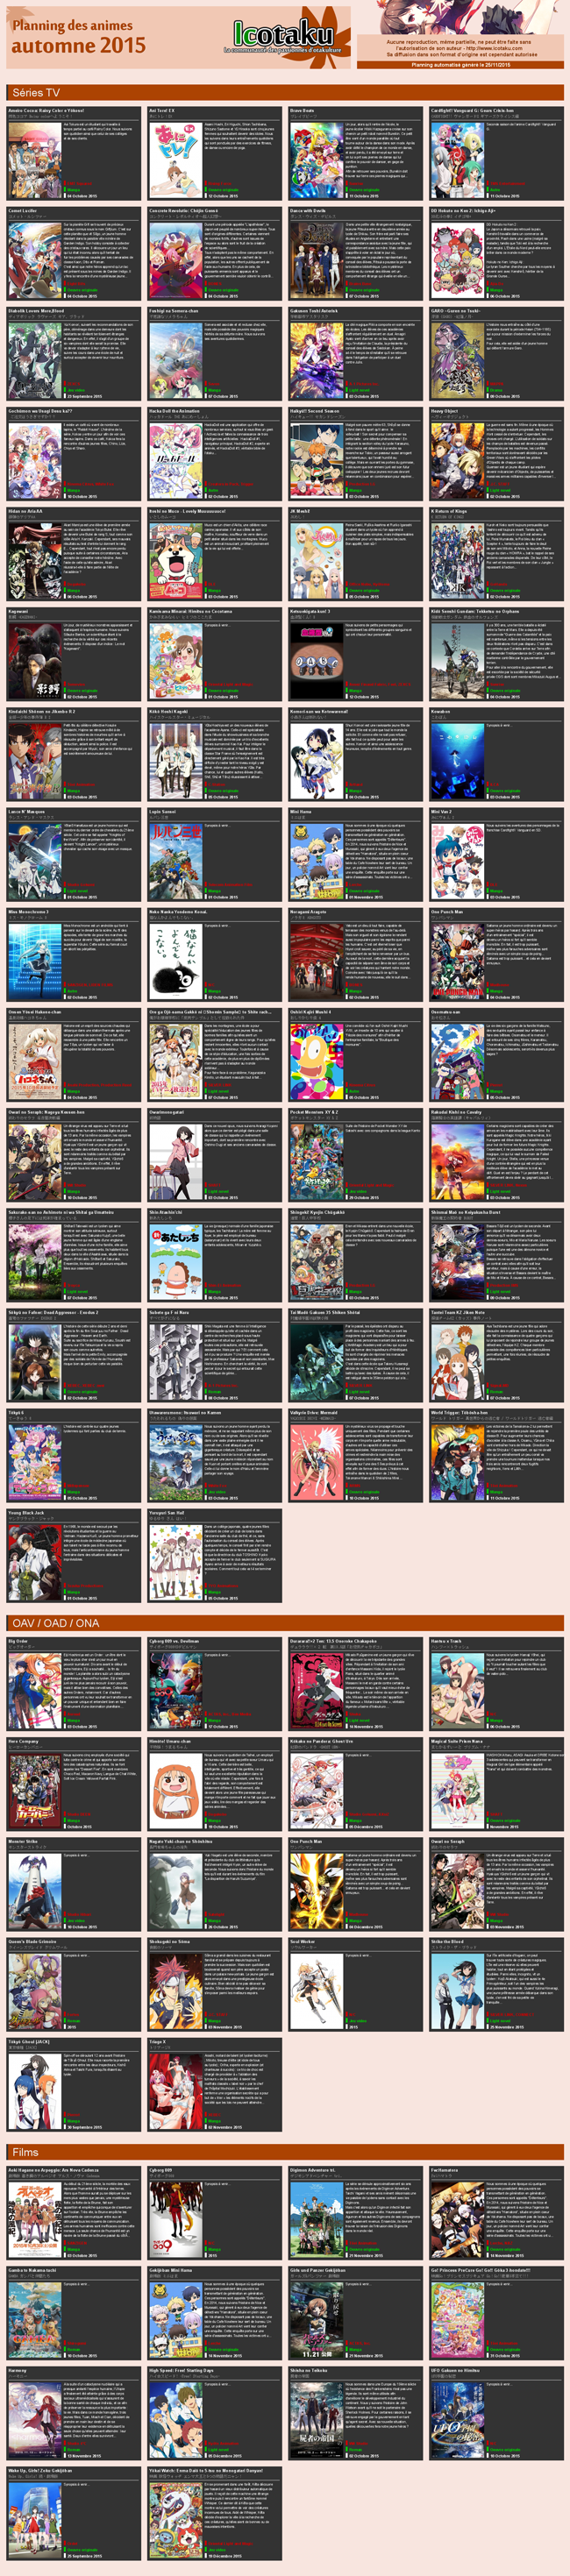 http://forum.icotaku.com/images/forum/plannings/automne2015/planning_anime_automne_2015_mini.png